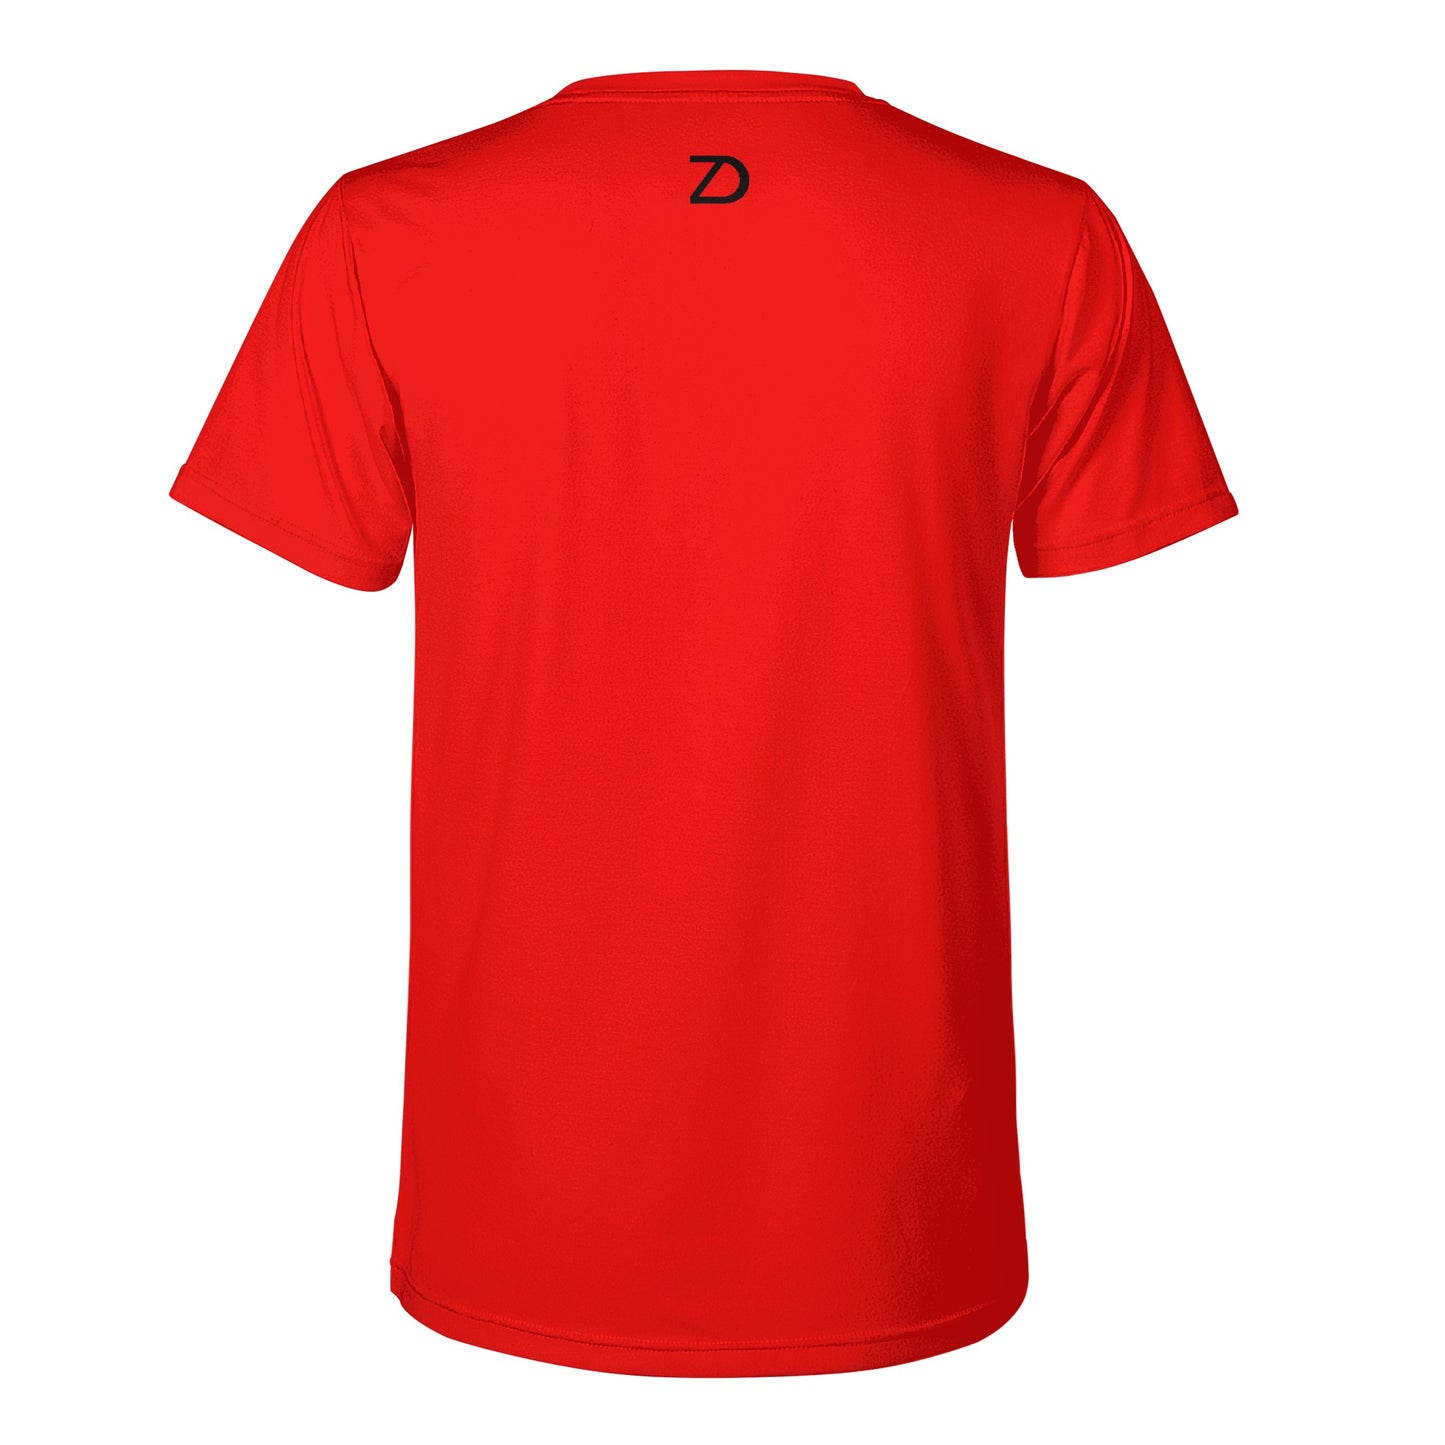 Neduz Mens Dark Lore Demon Red T-shirt